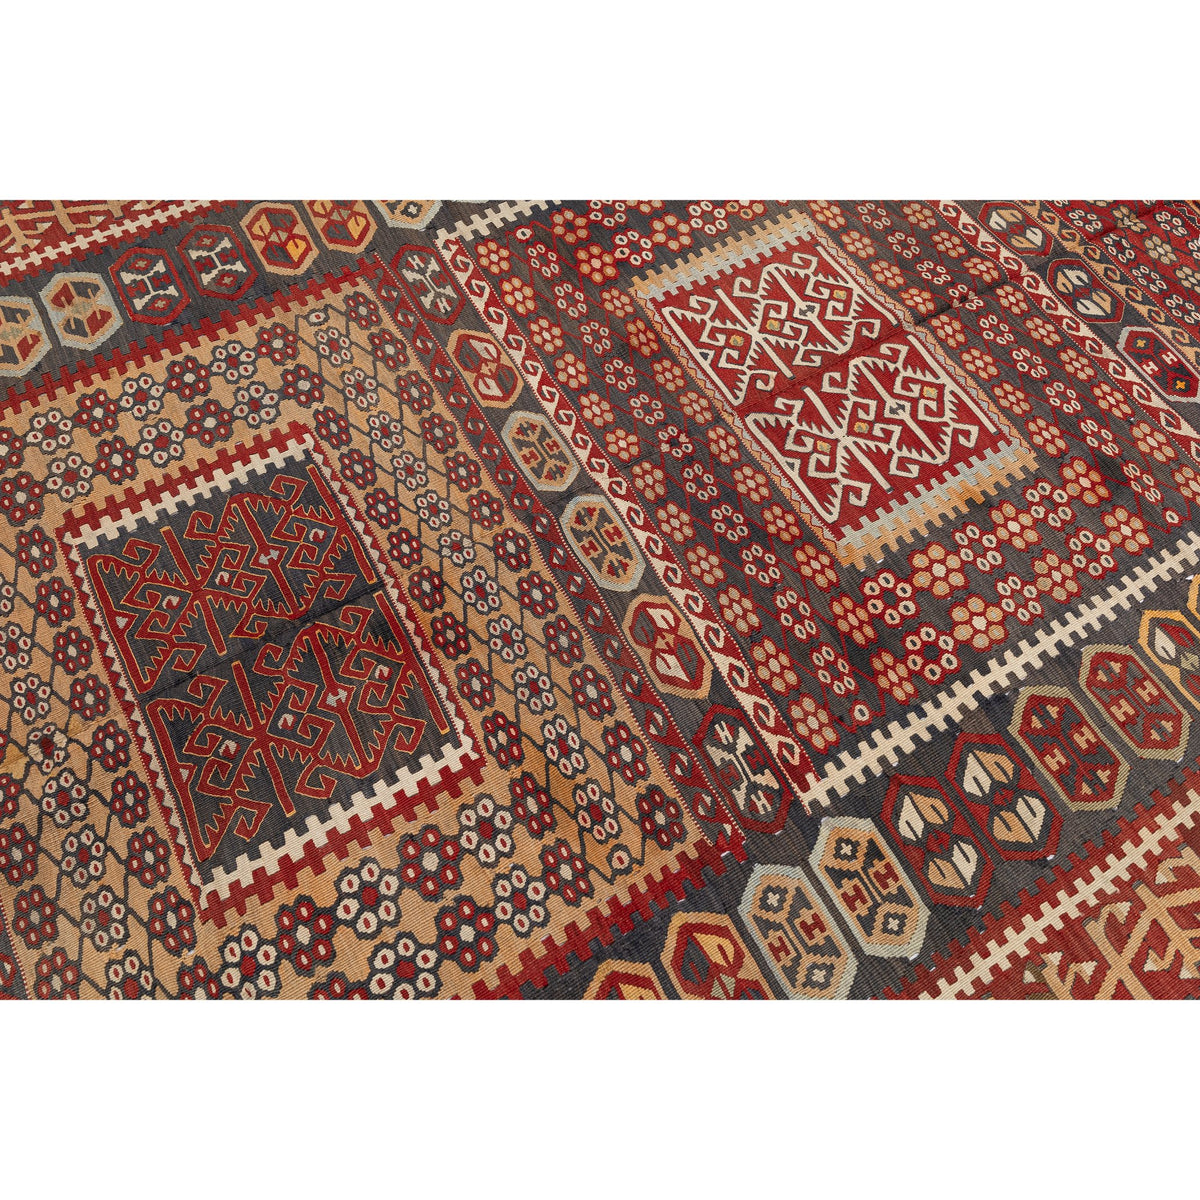 - (6' x 12'6'') Vintage Ethnic Kilim Rug